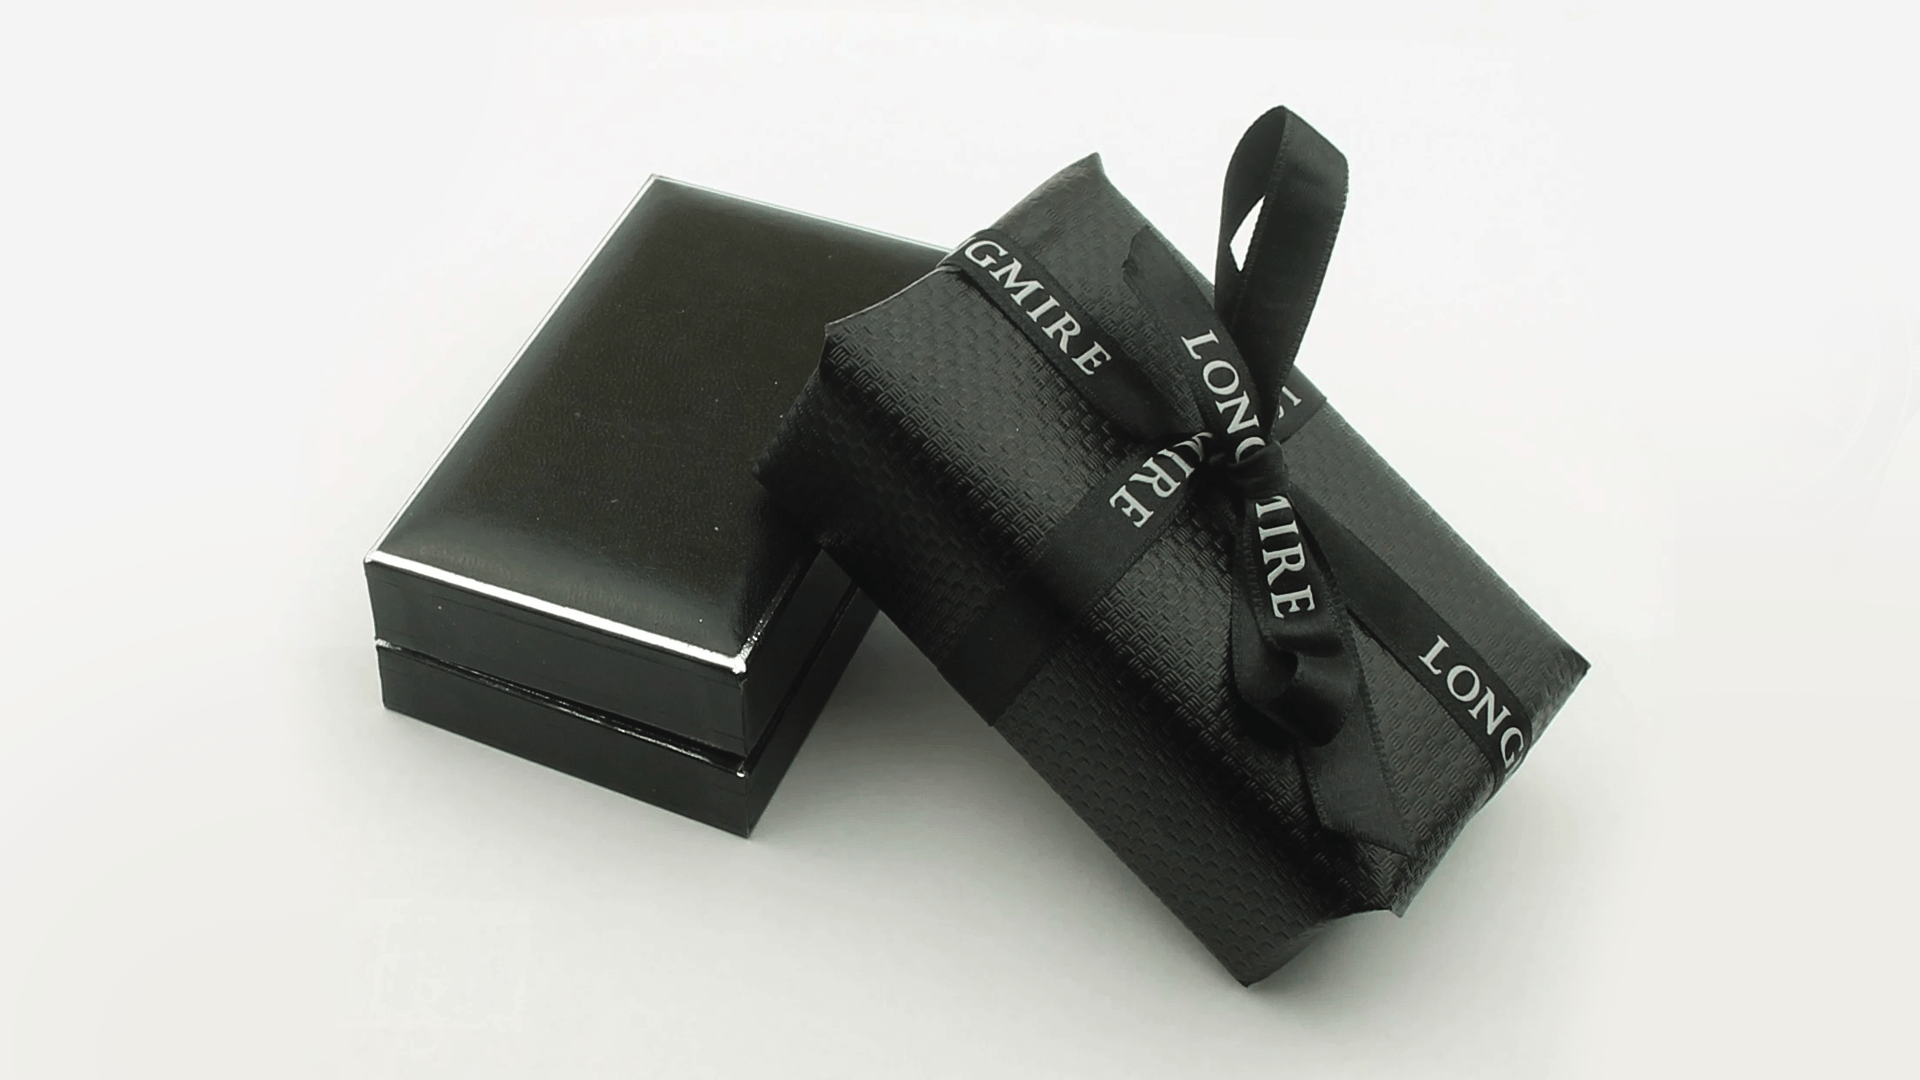 Cufflinks - The Ultimate Luxury Corporate Gift